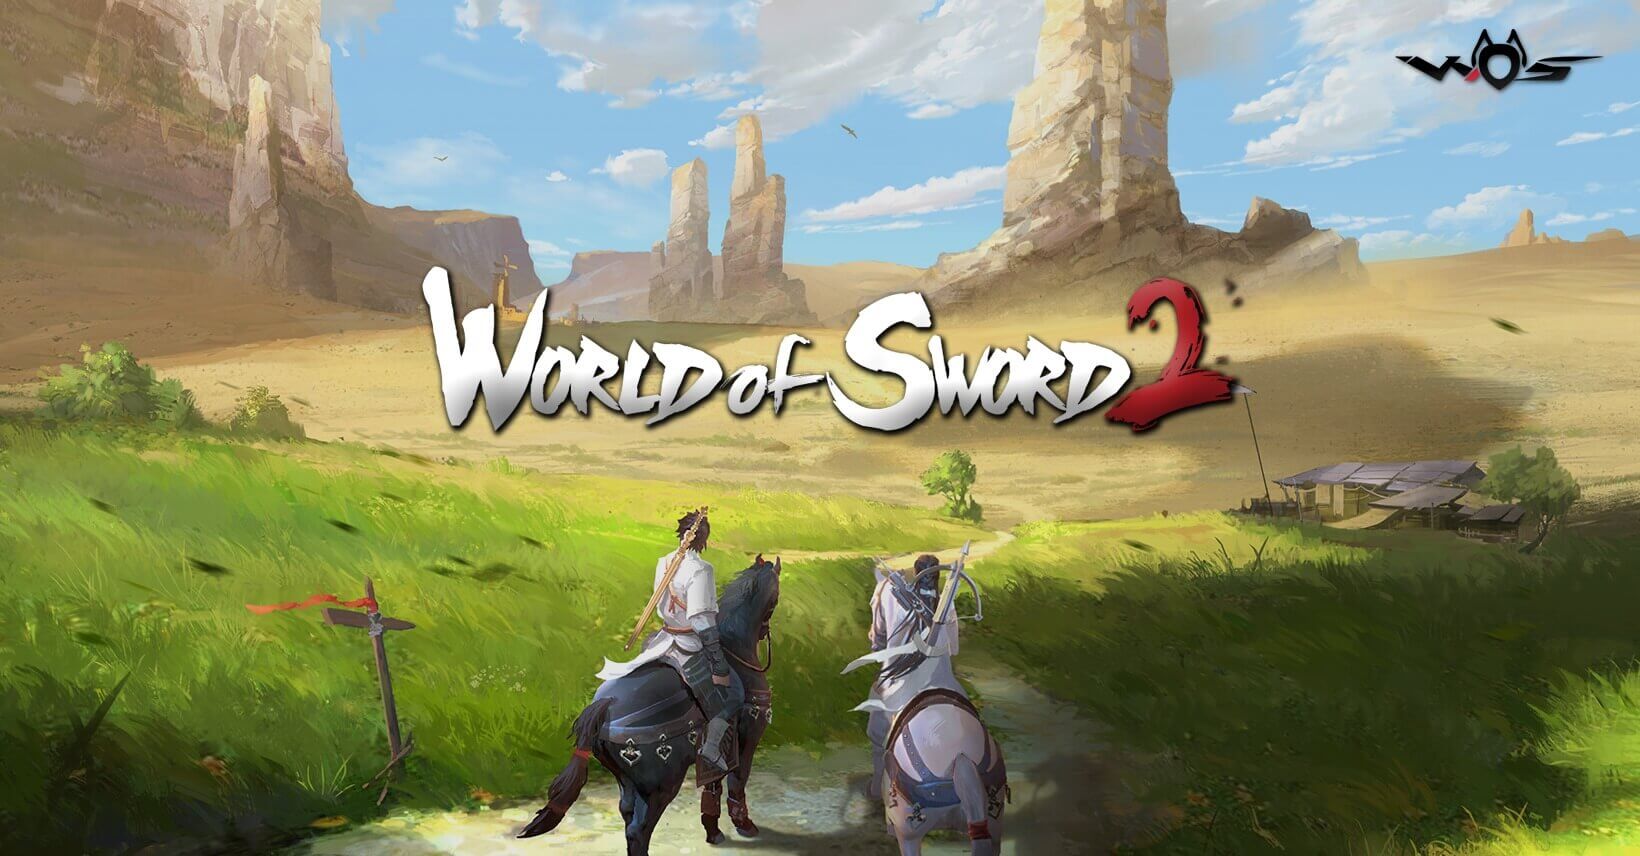 World of Sword 2